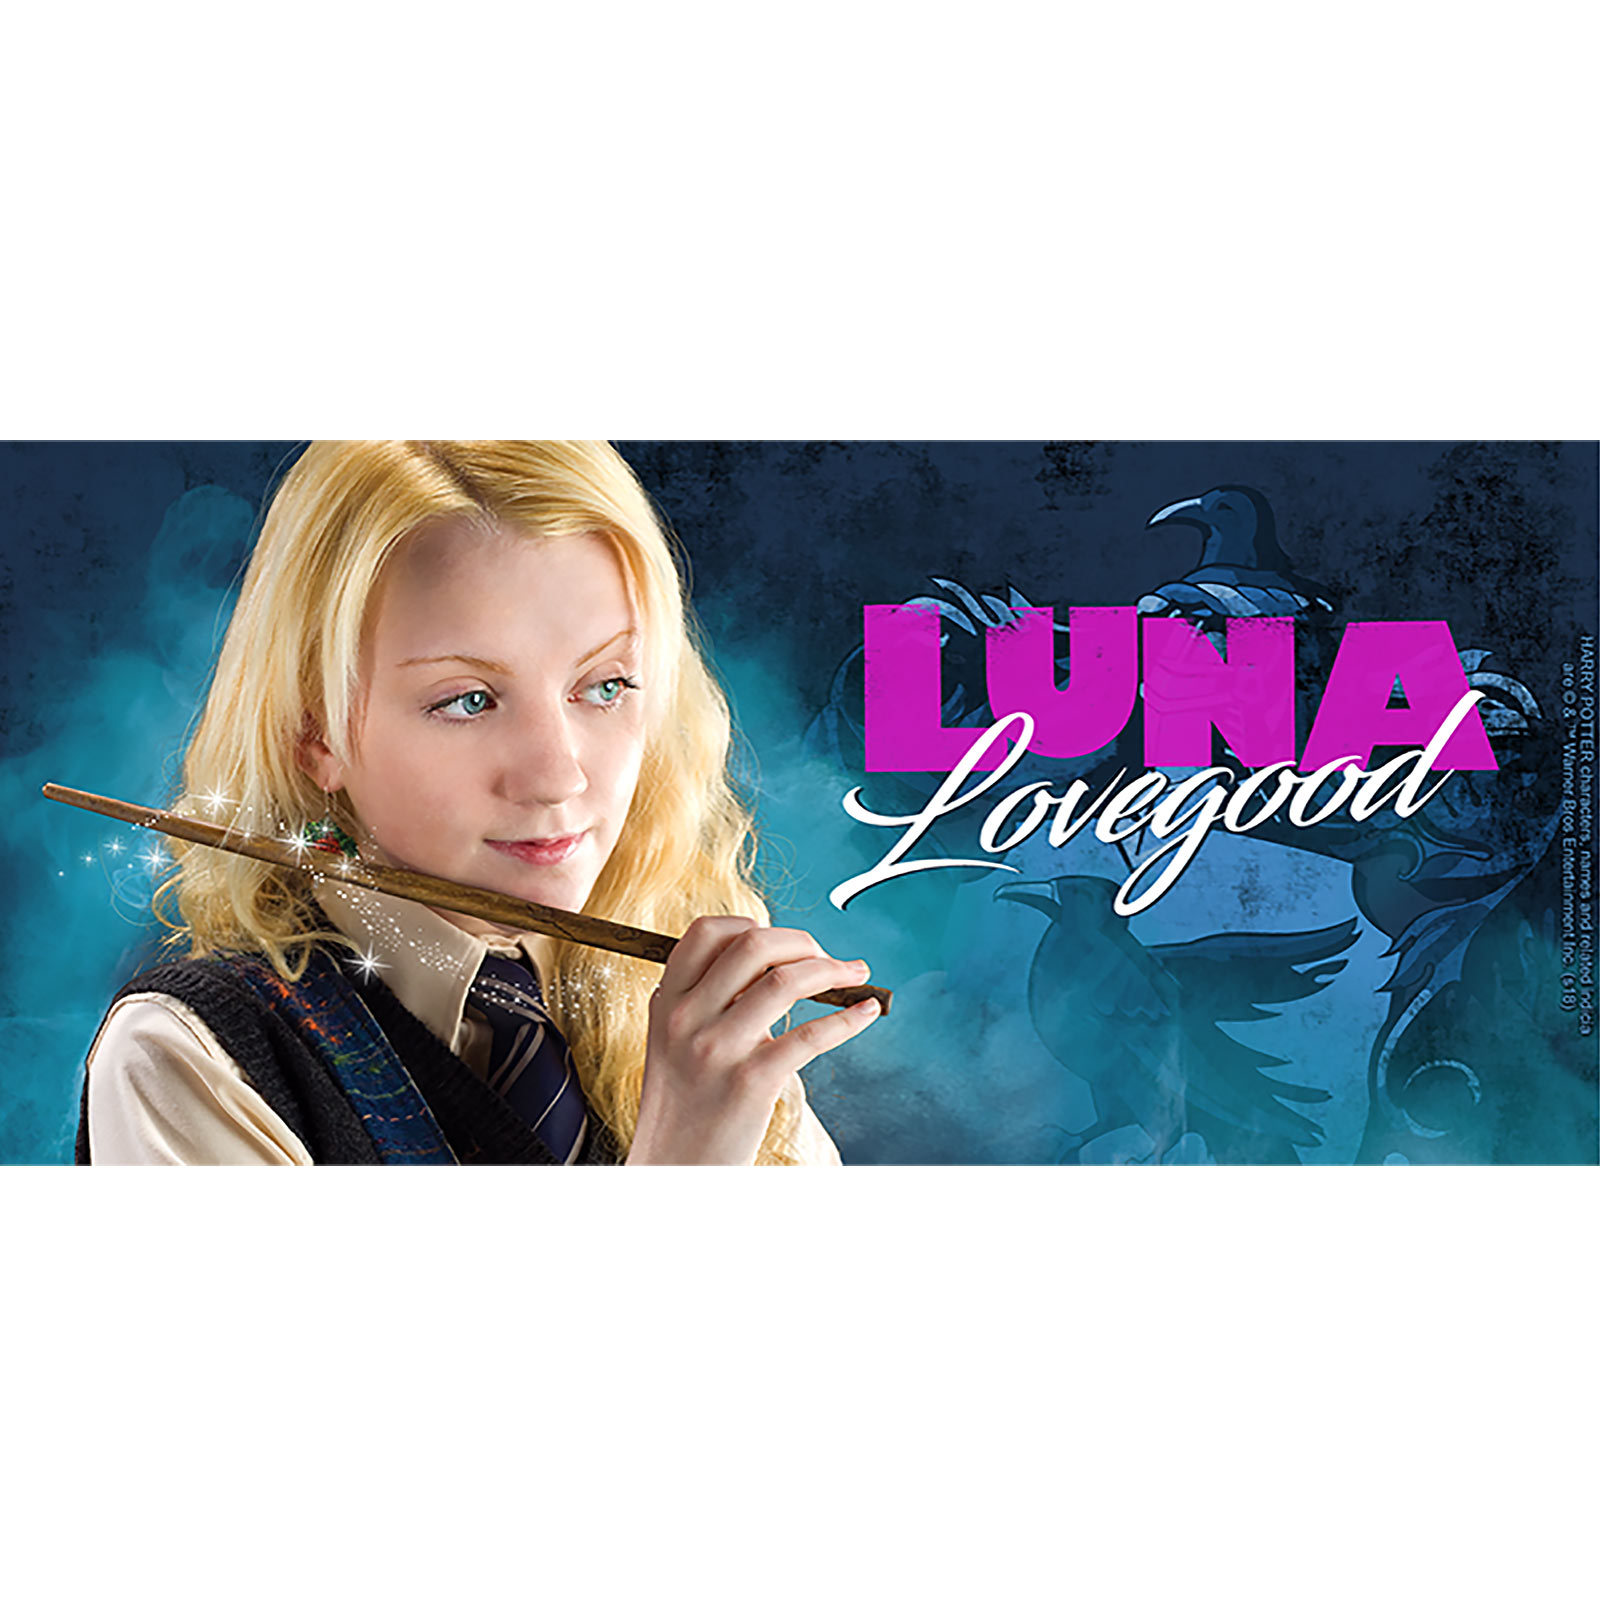 Harry Potter - Luna Lovegood Mok